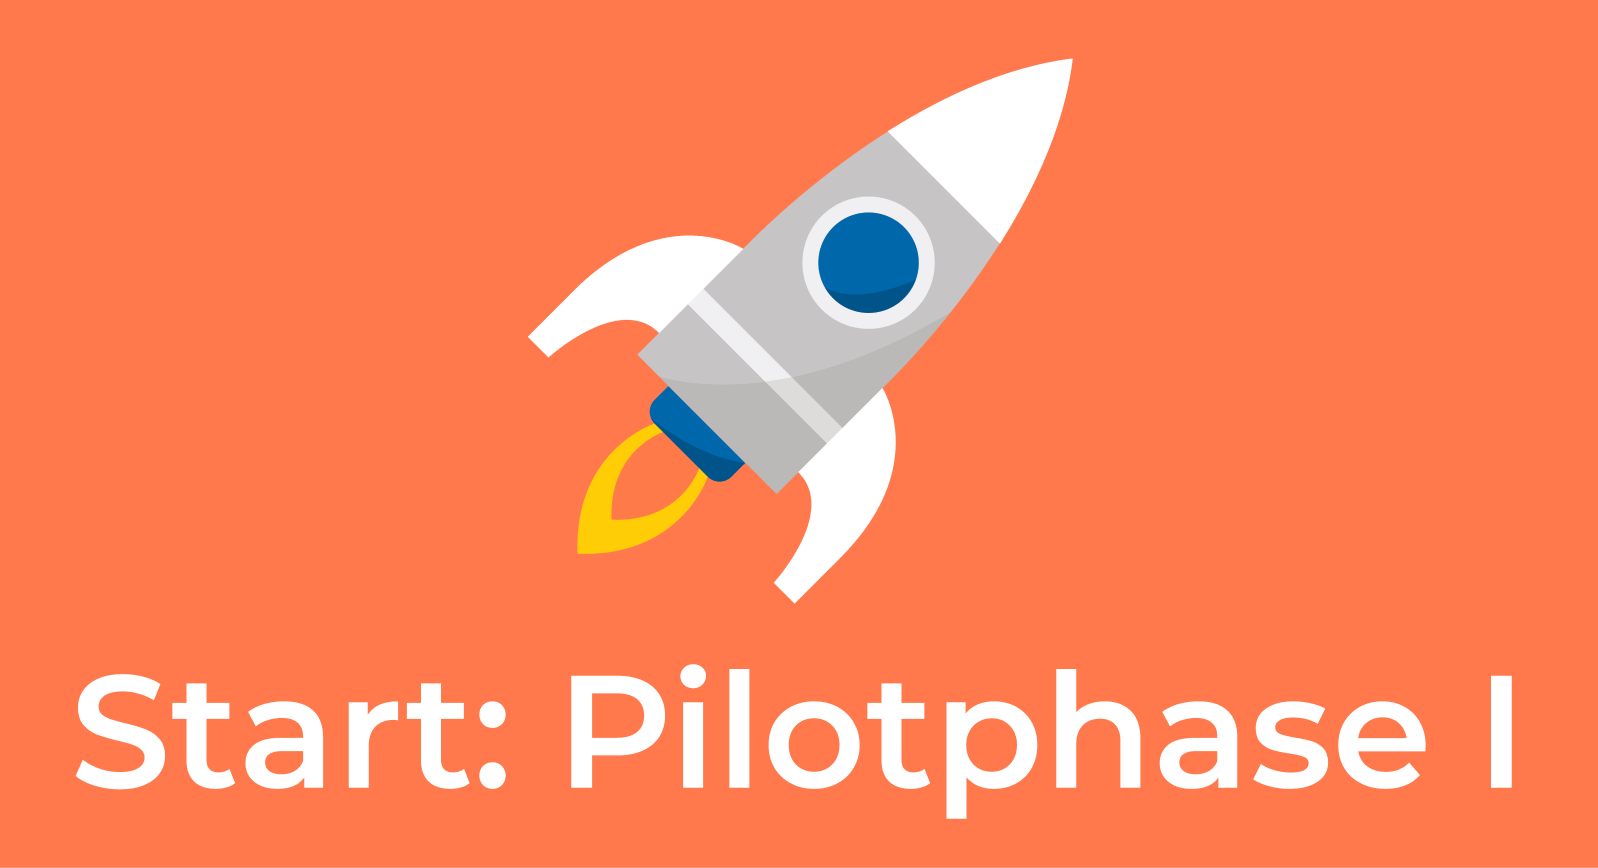 Rakete mit Text "Start Pilotphase I"